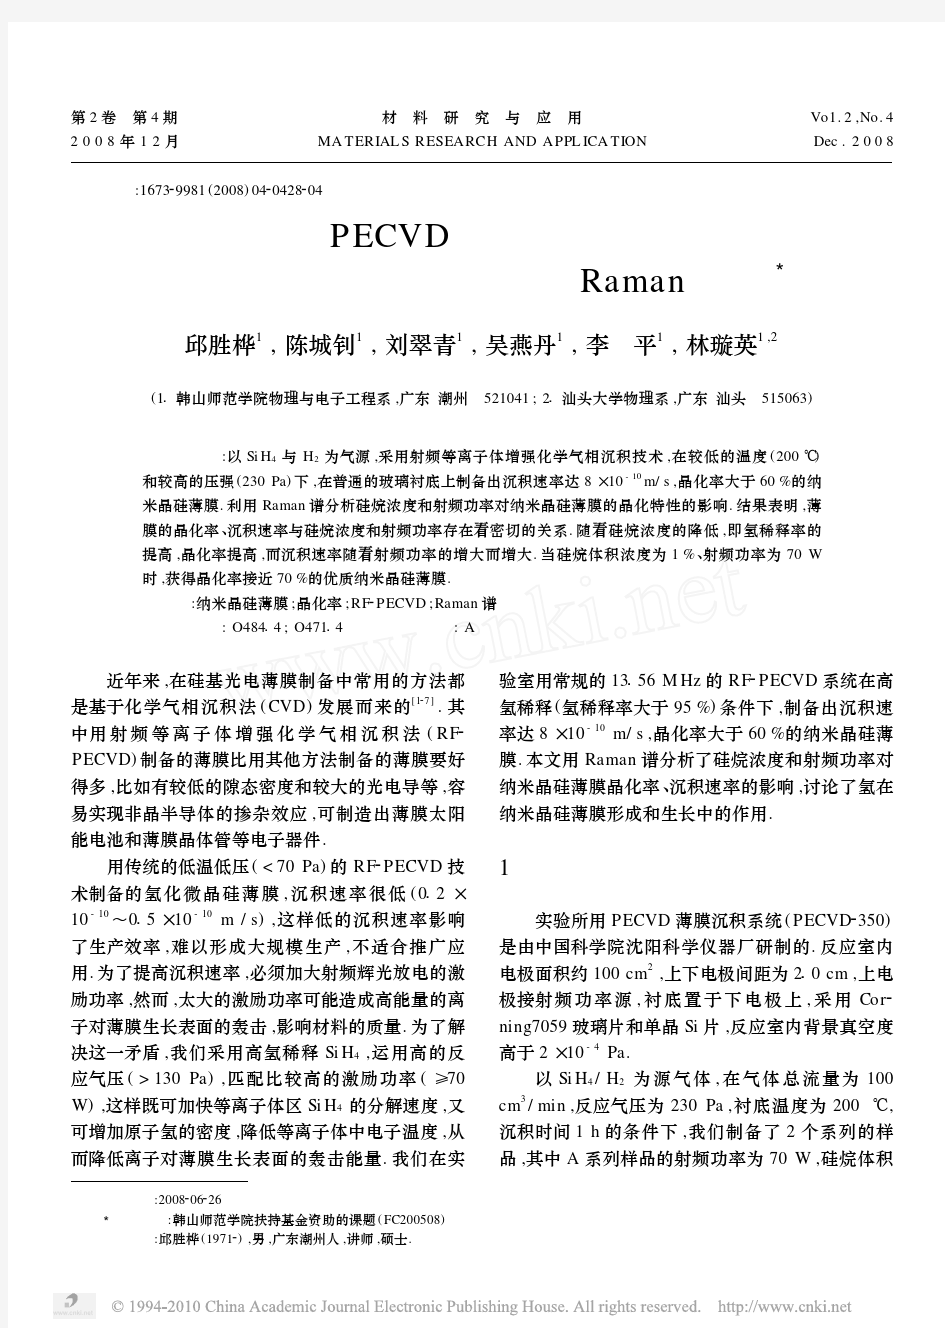 PECVD法低温制备纳米晶硅薄膜晶化特性的Raman分析